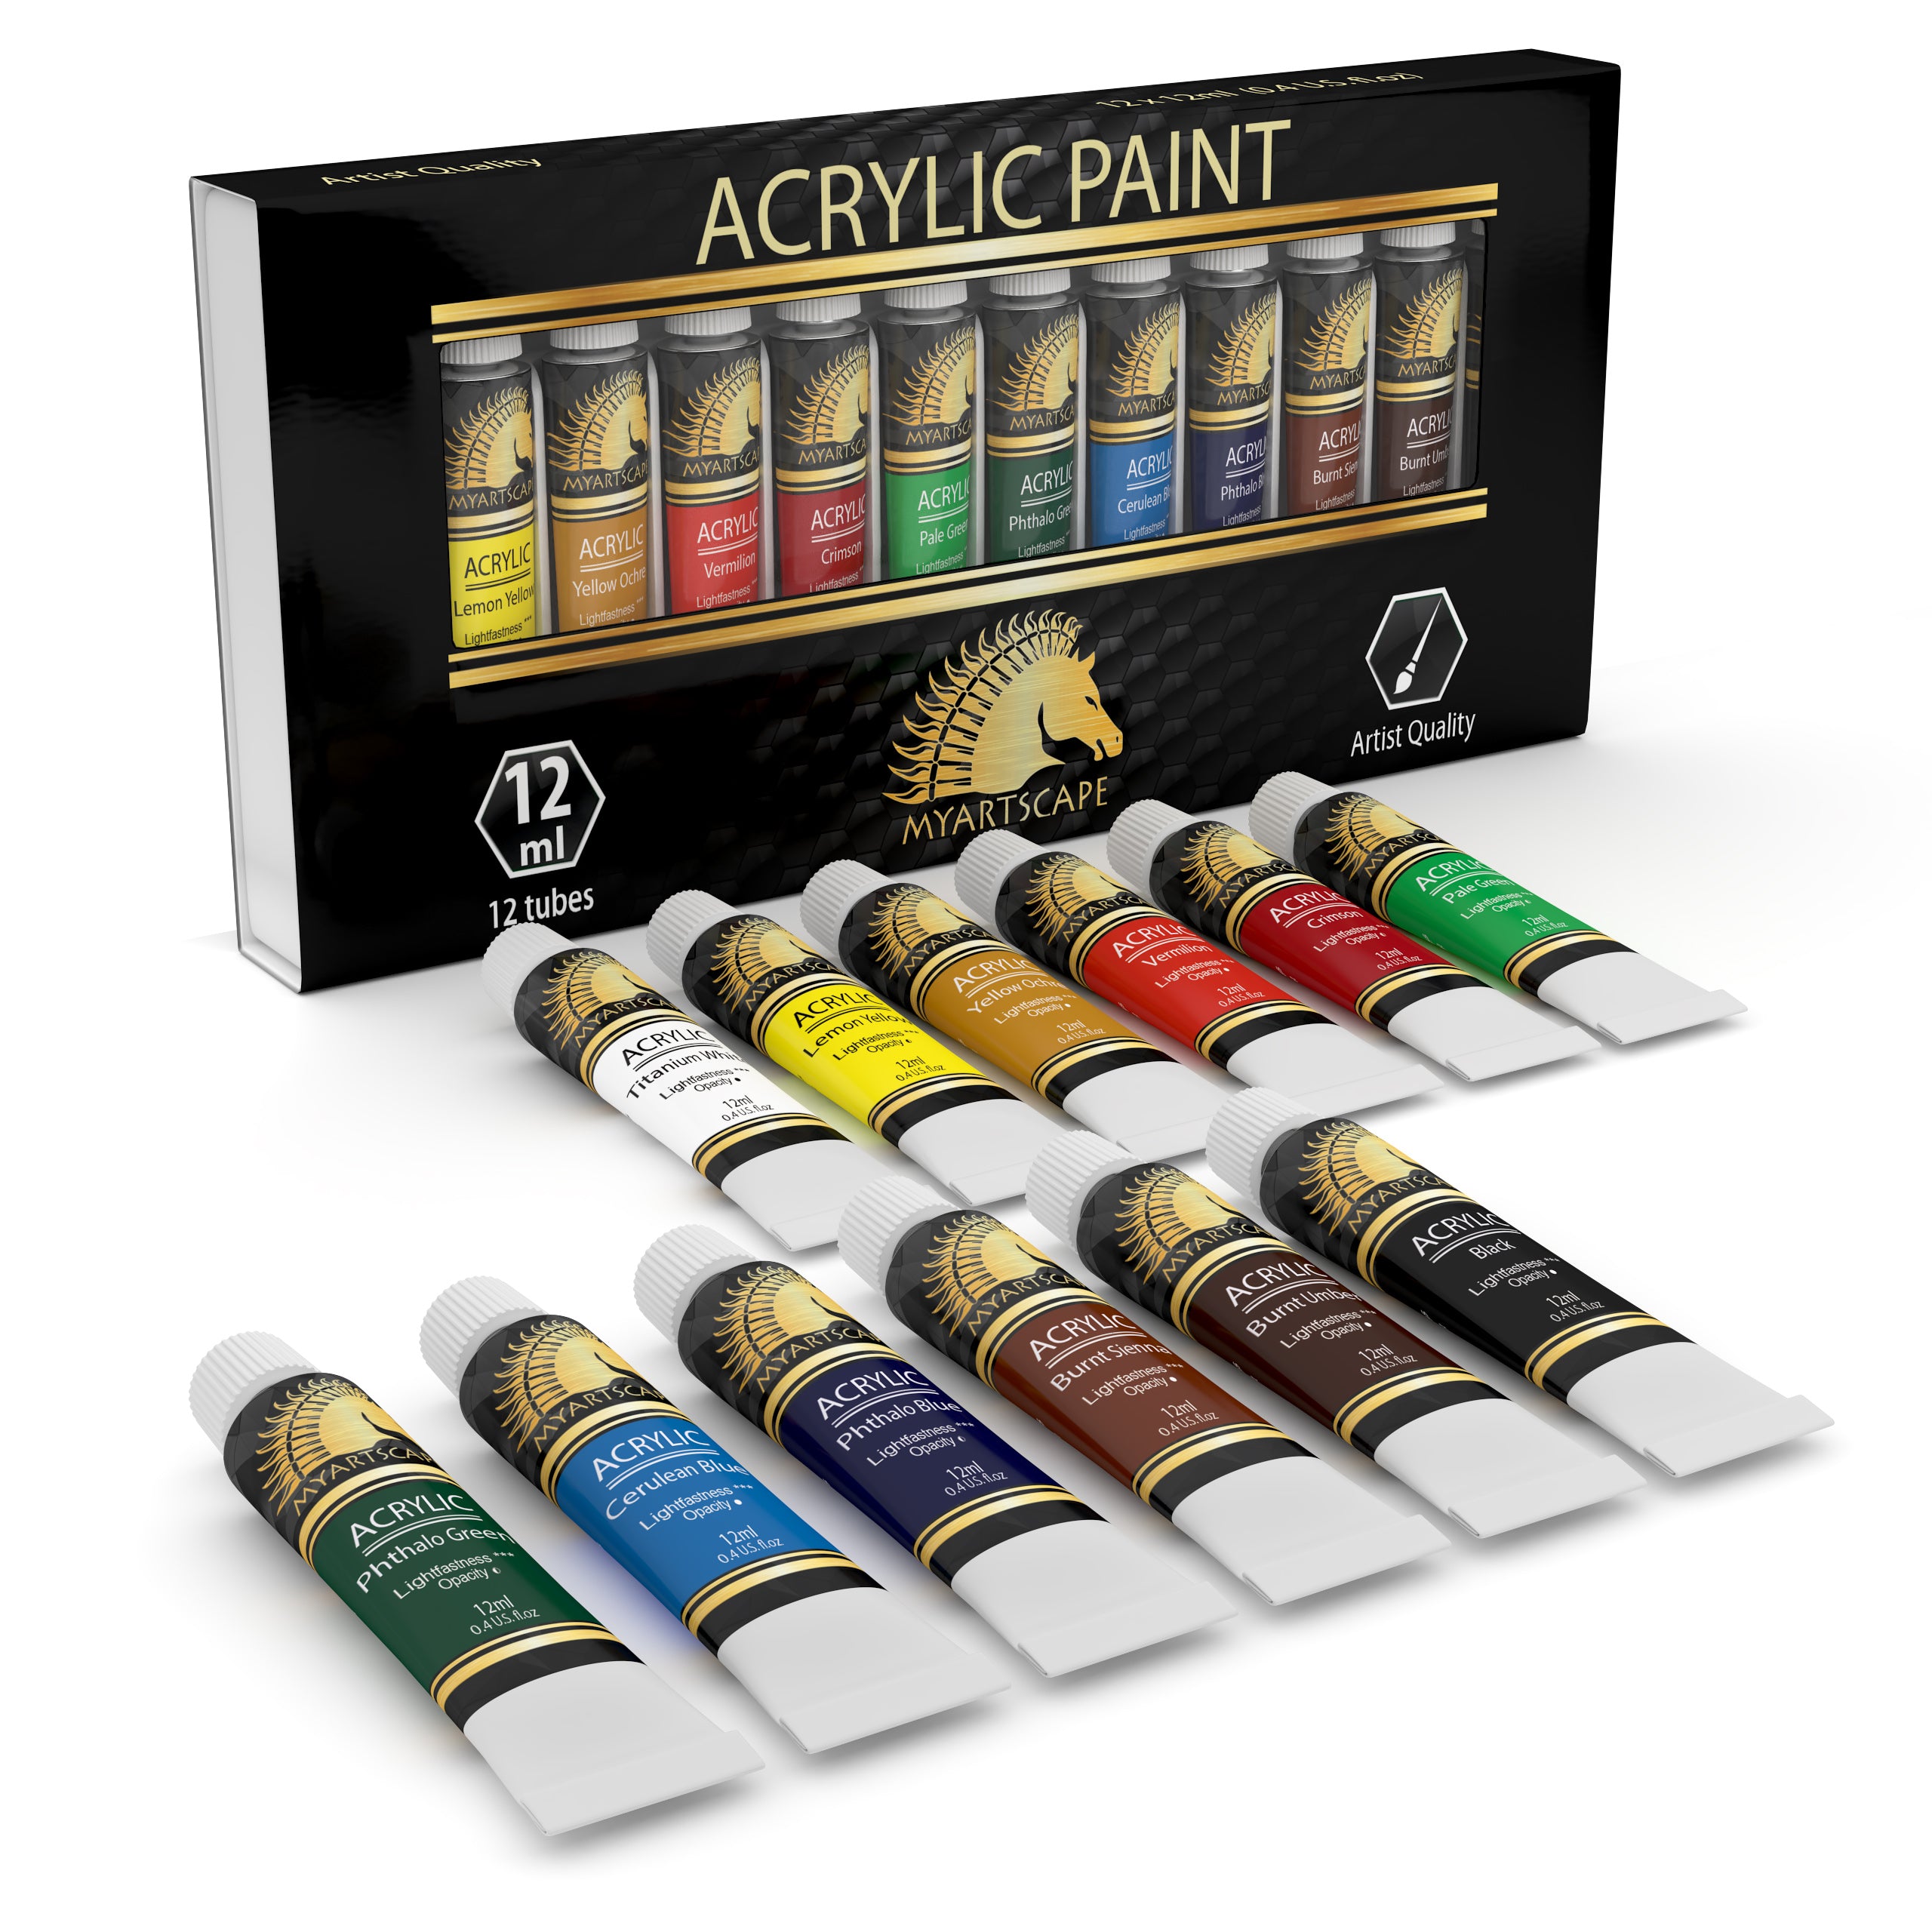 Acrylic Paint Set - 12 x 300ml Bottles - Heavy Body - Lightfast Paints -  Artist Quality – MyArtscape